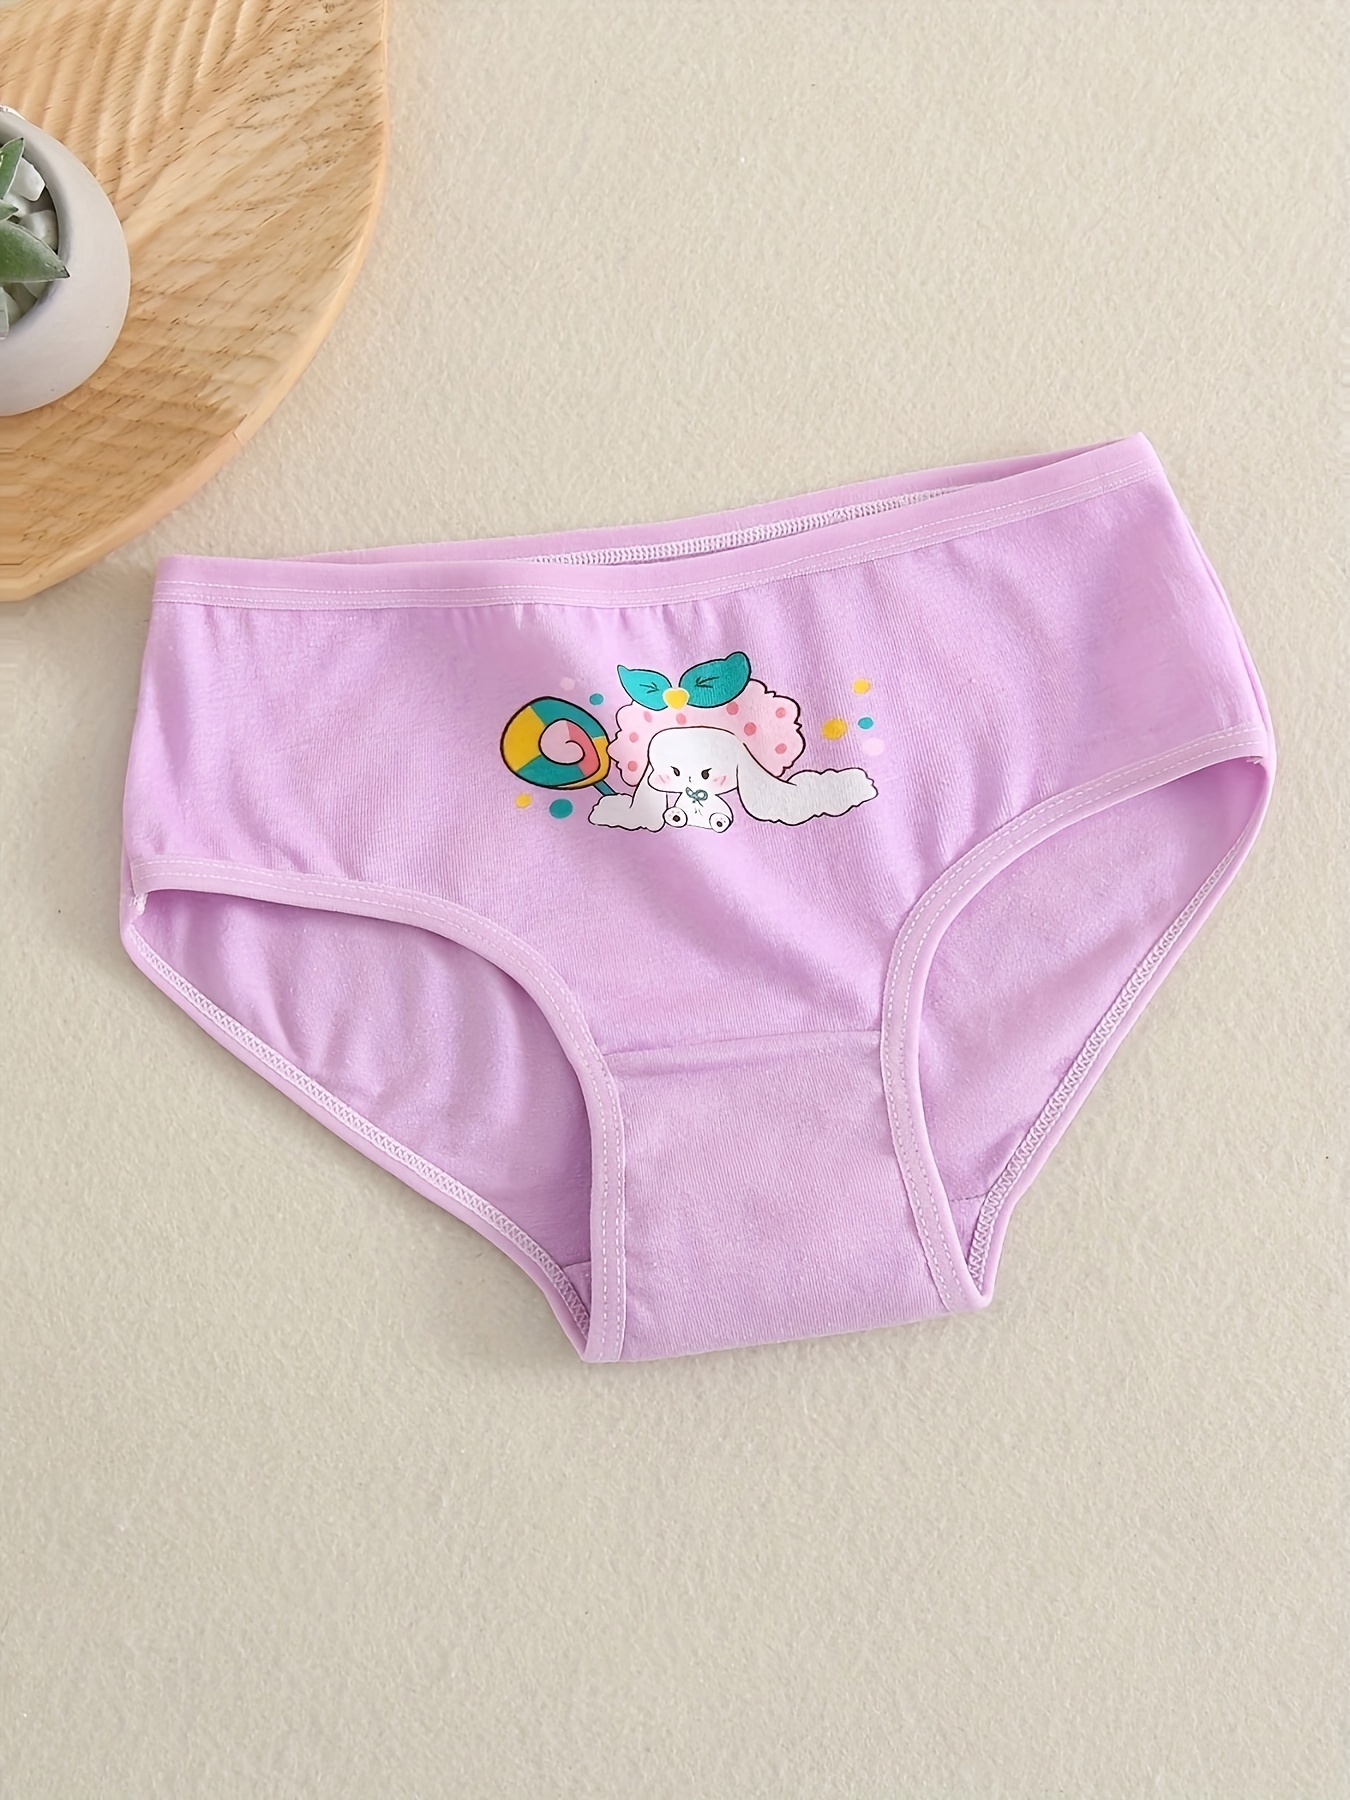 Cartoon Rabbit Print Cotton Panty Shorts For Girls Breathable